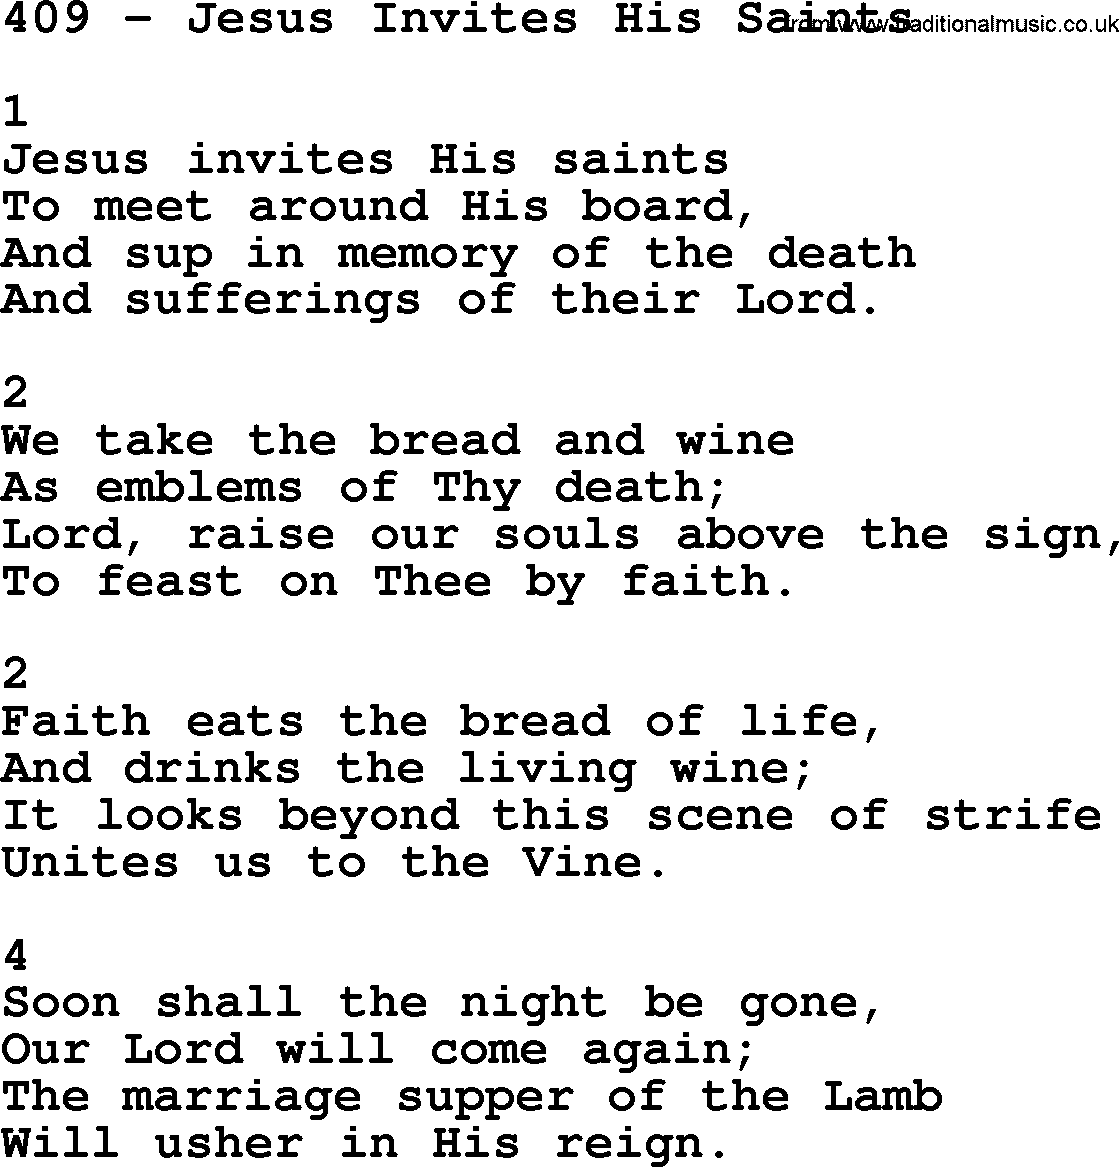 Complete Adventis Hymnal, title: 409-Jesus Invites His Saints, with lyrics, midi, mp3, powerpoints(PPT) and PDF,